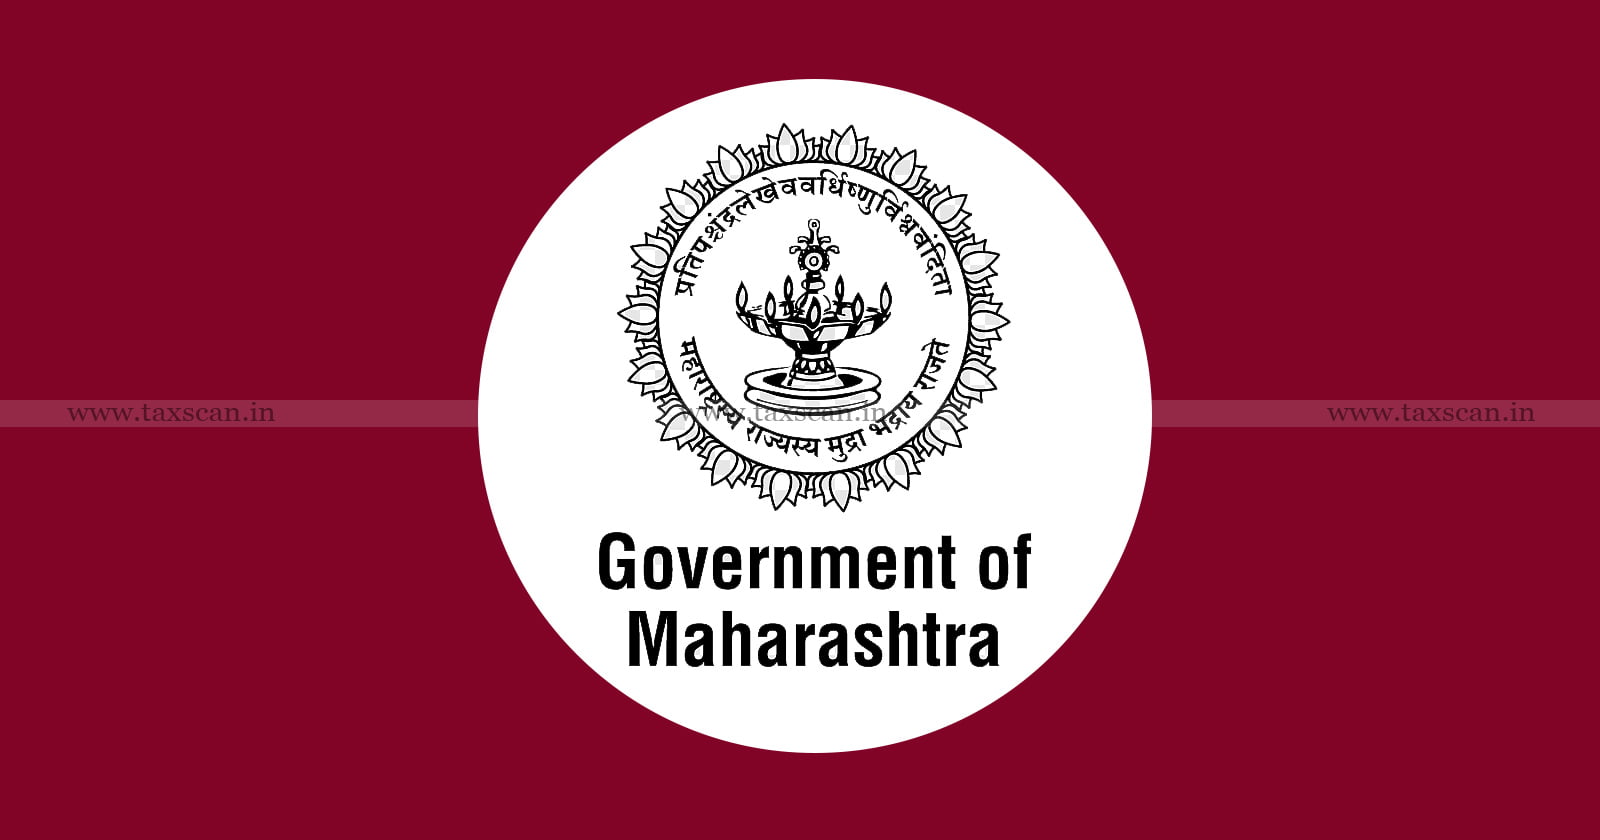 Settlement - arrears - Tax - interest - penalty - late fee - Maharashtra Govt - Late Fee Act - Taxscan